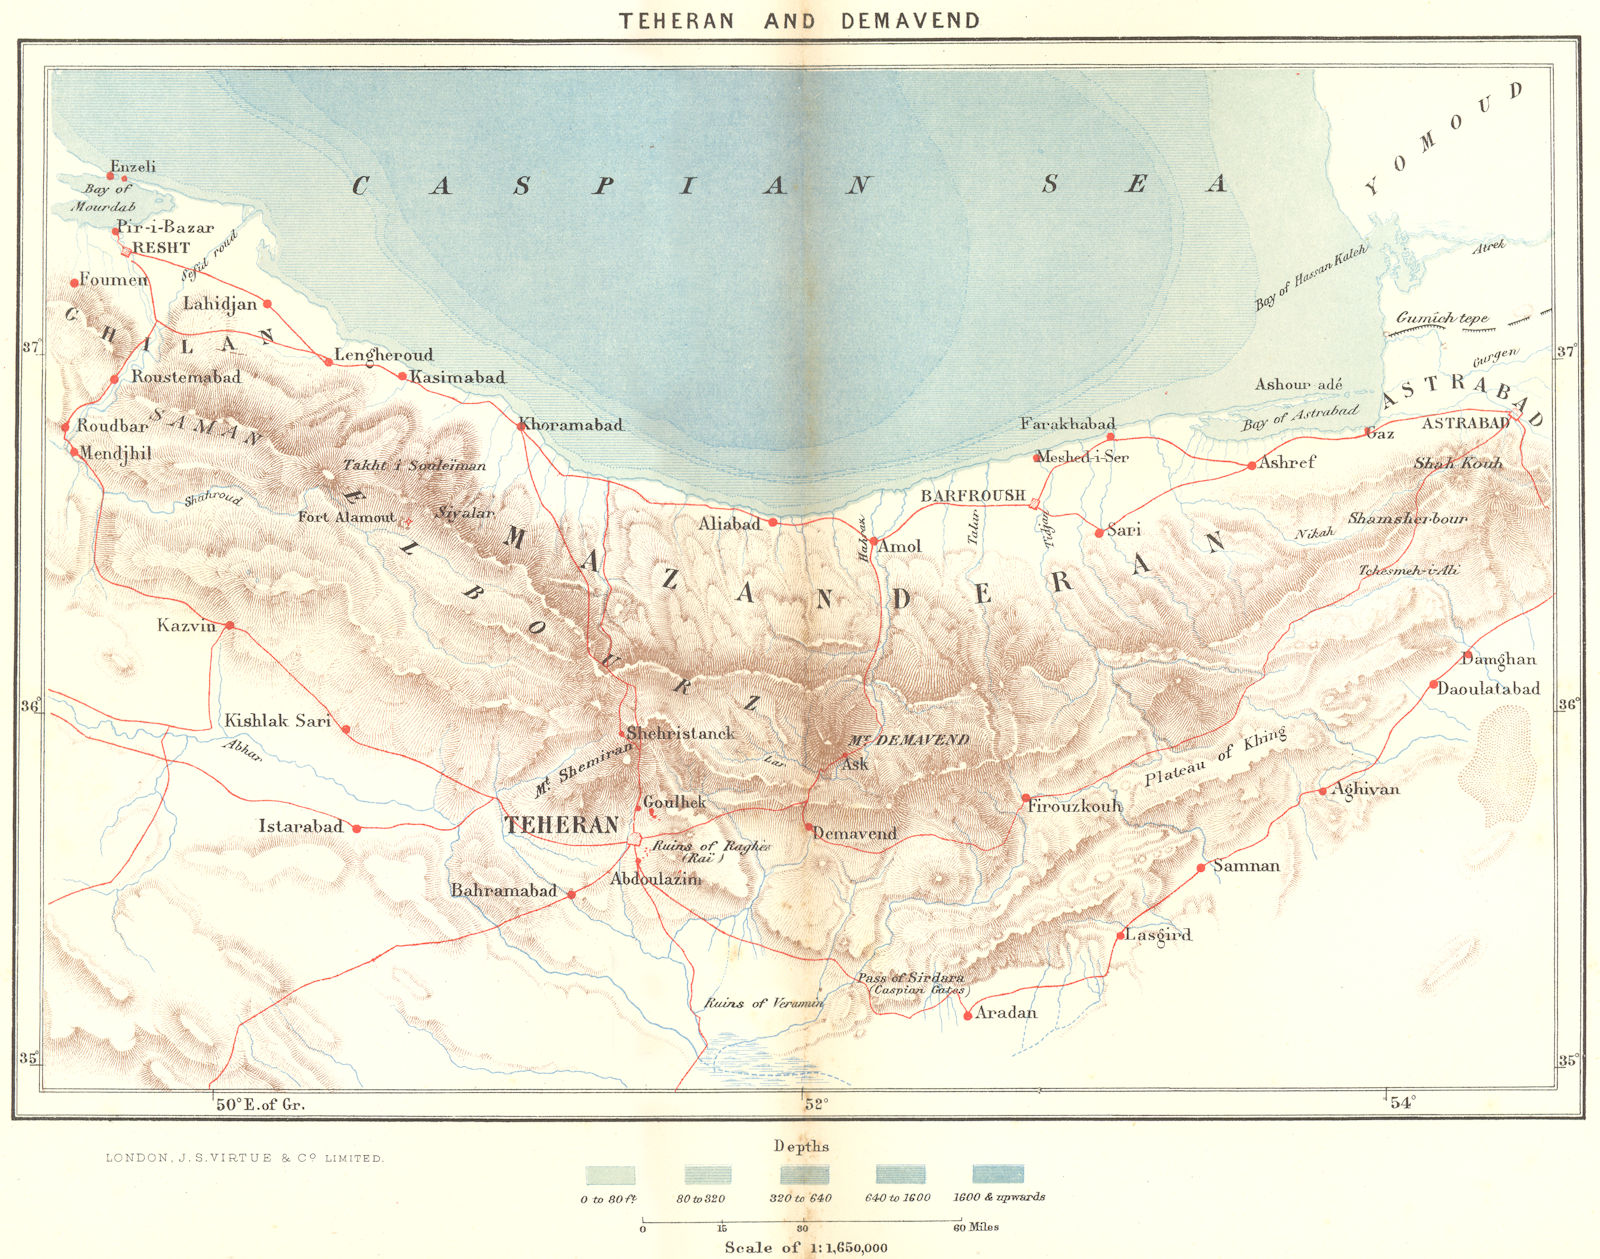 IRAN. Tehran & Demavend c1885 old antique vintage map plan chart